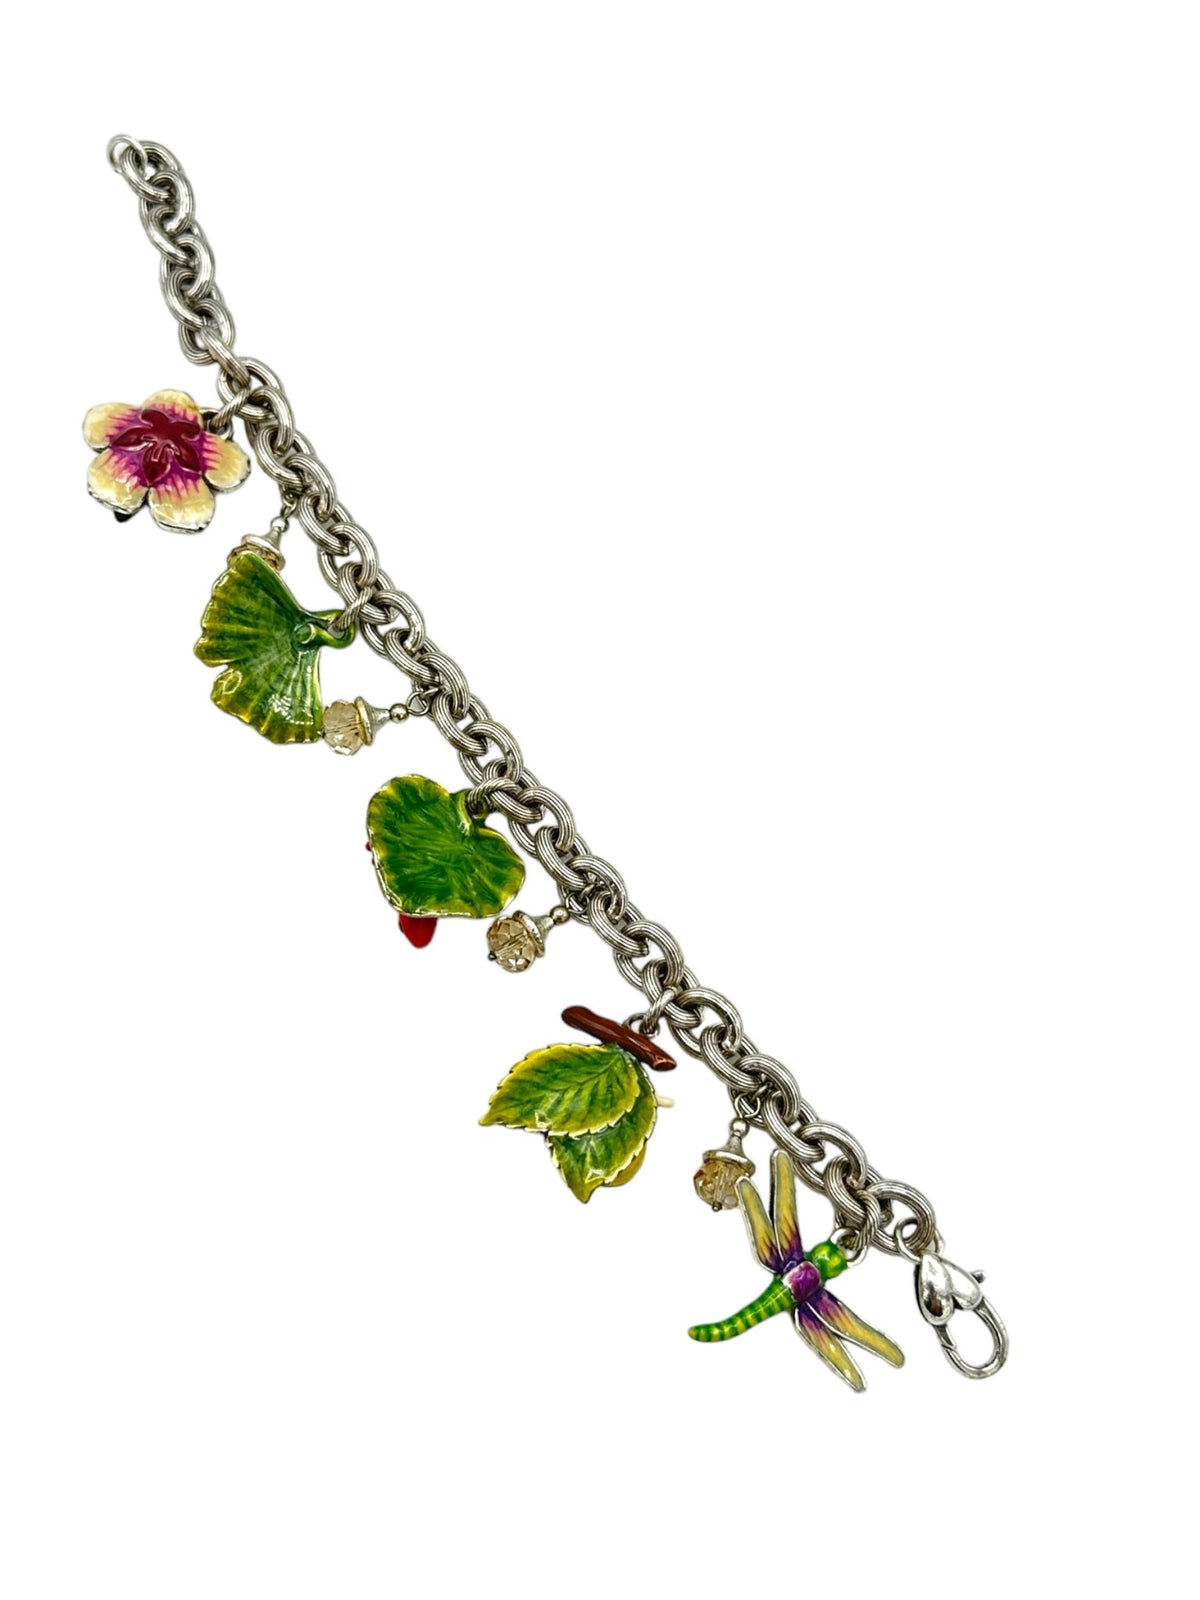 Brighton Retired Jewelry Enamel Floral Pond 'Marvels' Silver Charm Bracelet - 24 Wishes Vintage Jewelry